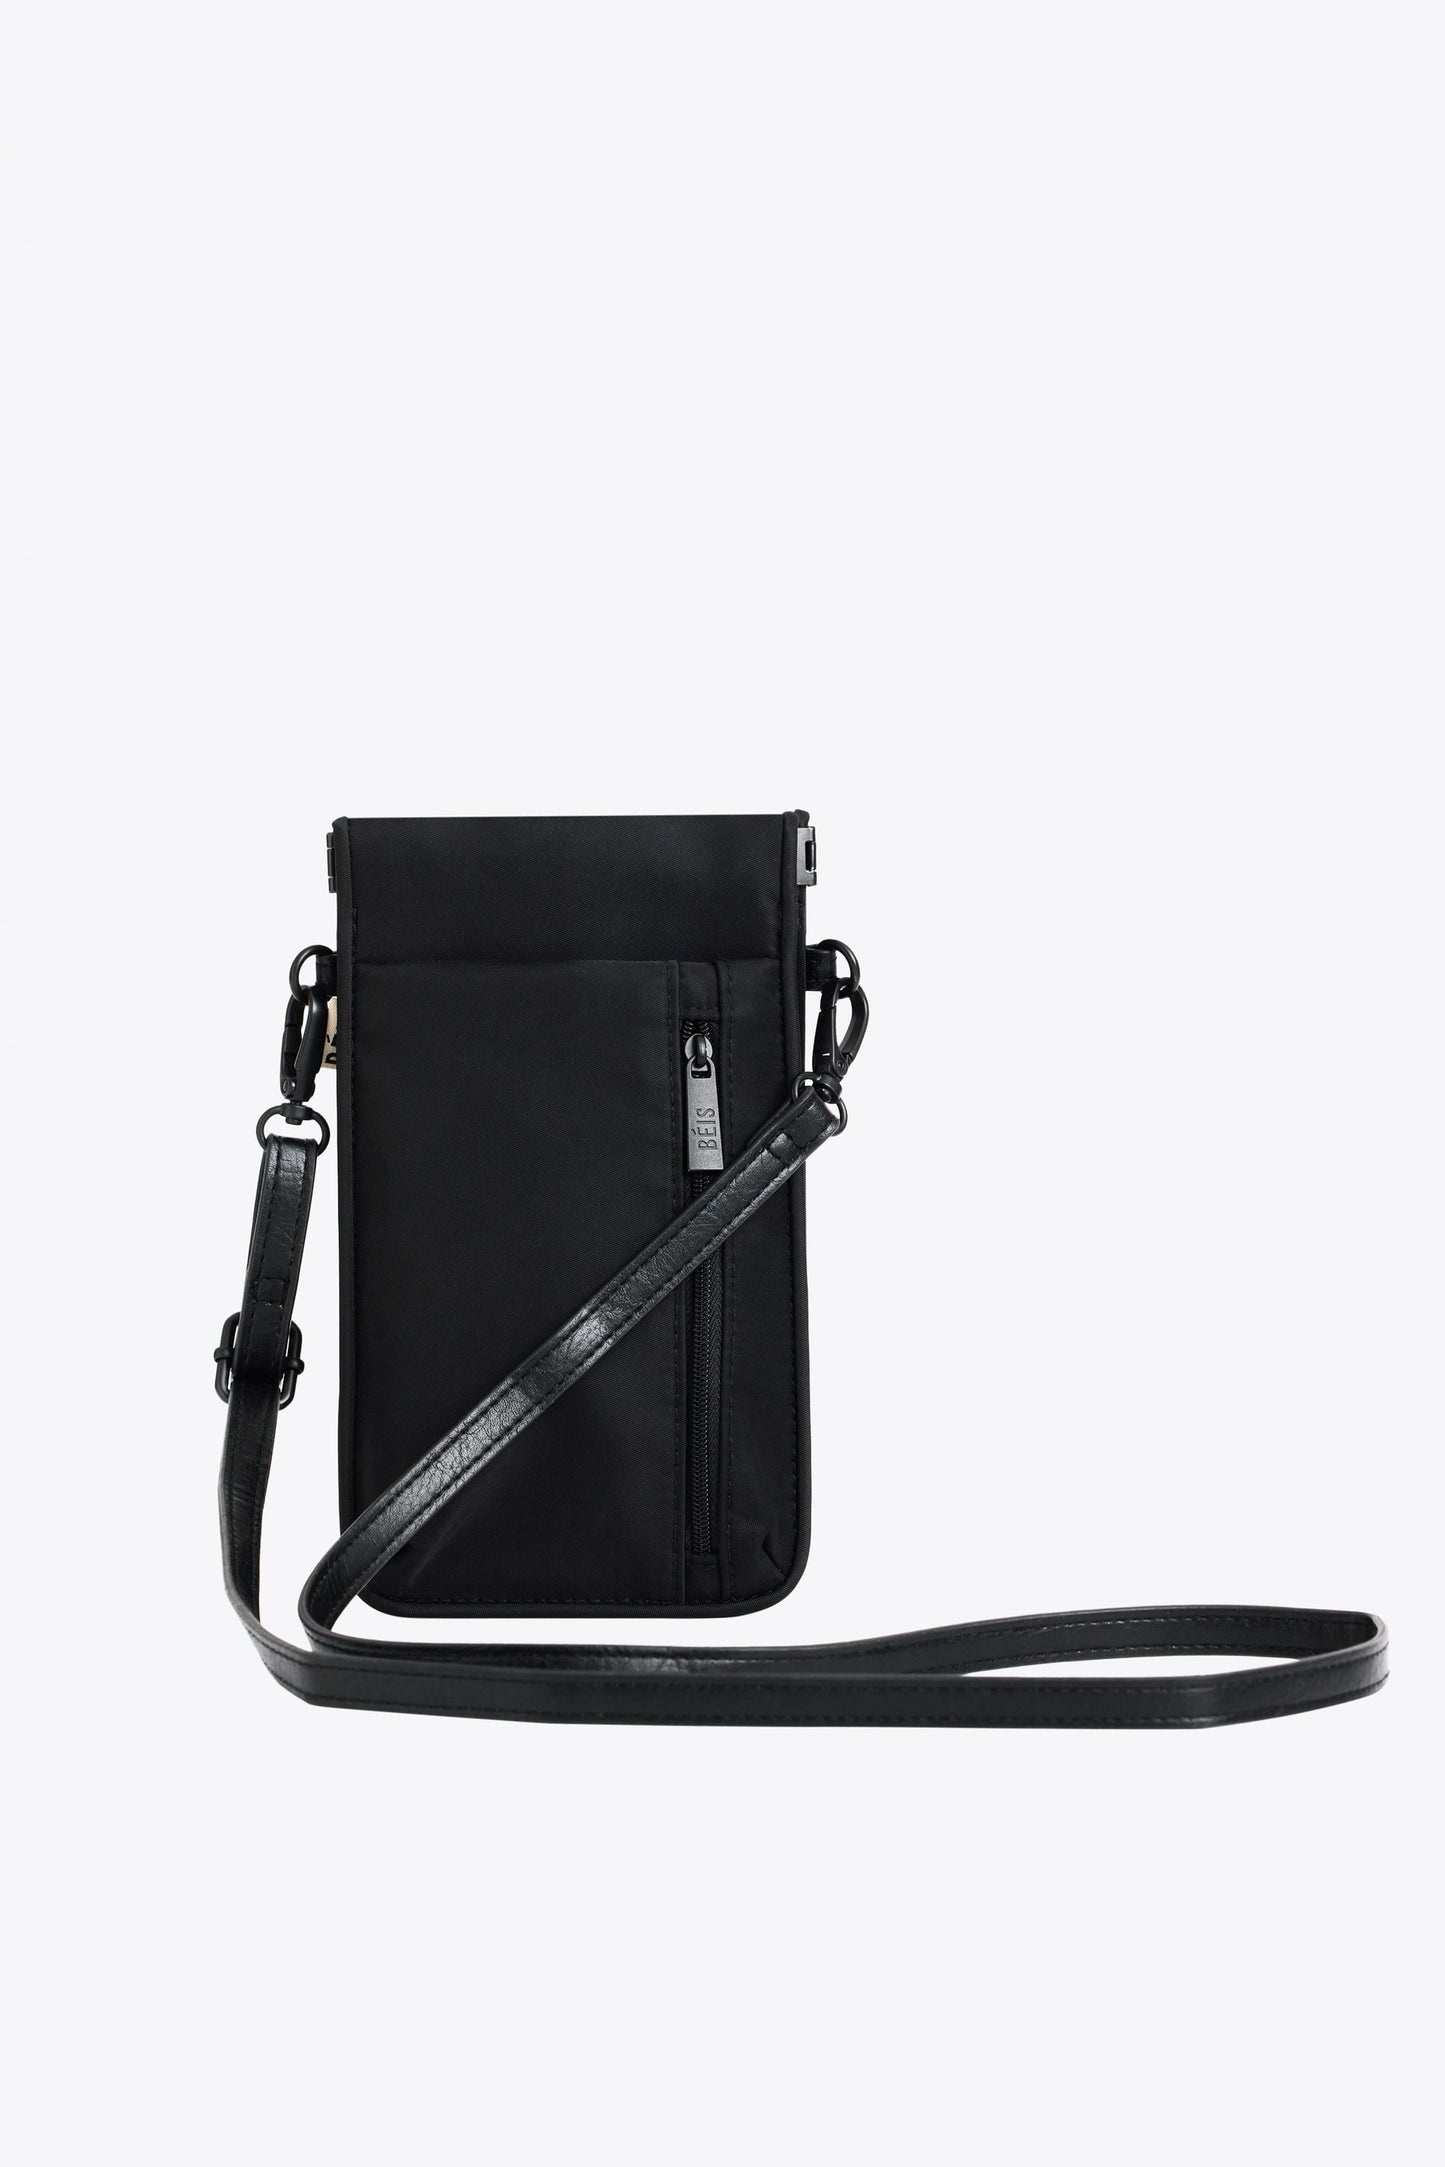 Béis 'The ID Crossbody Bag' in Black - Crossbody Bag with ID Pocket